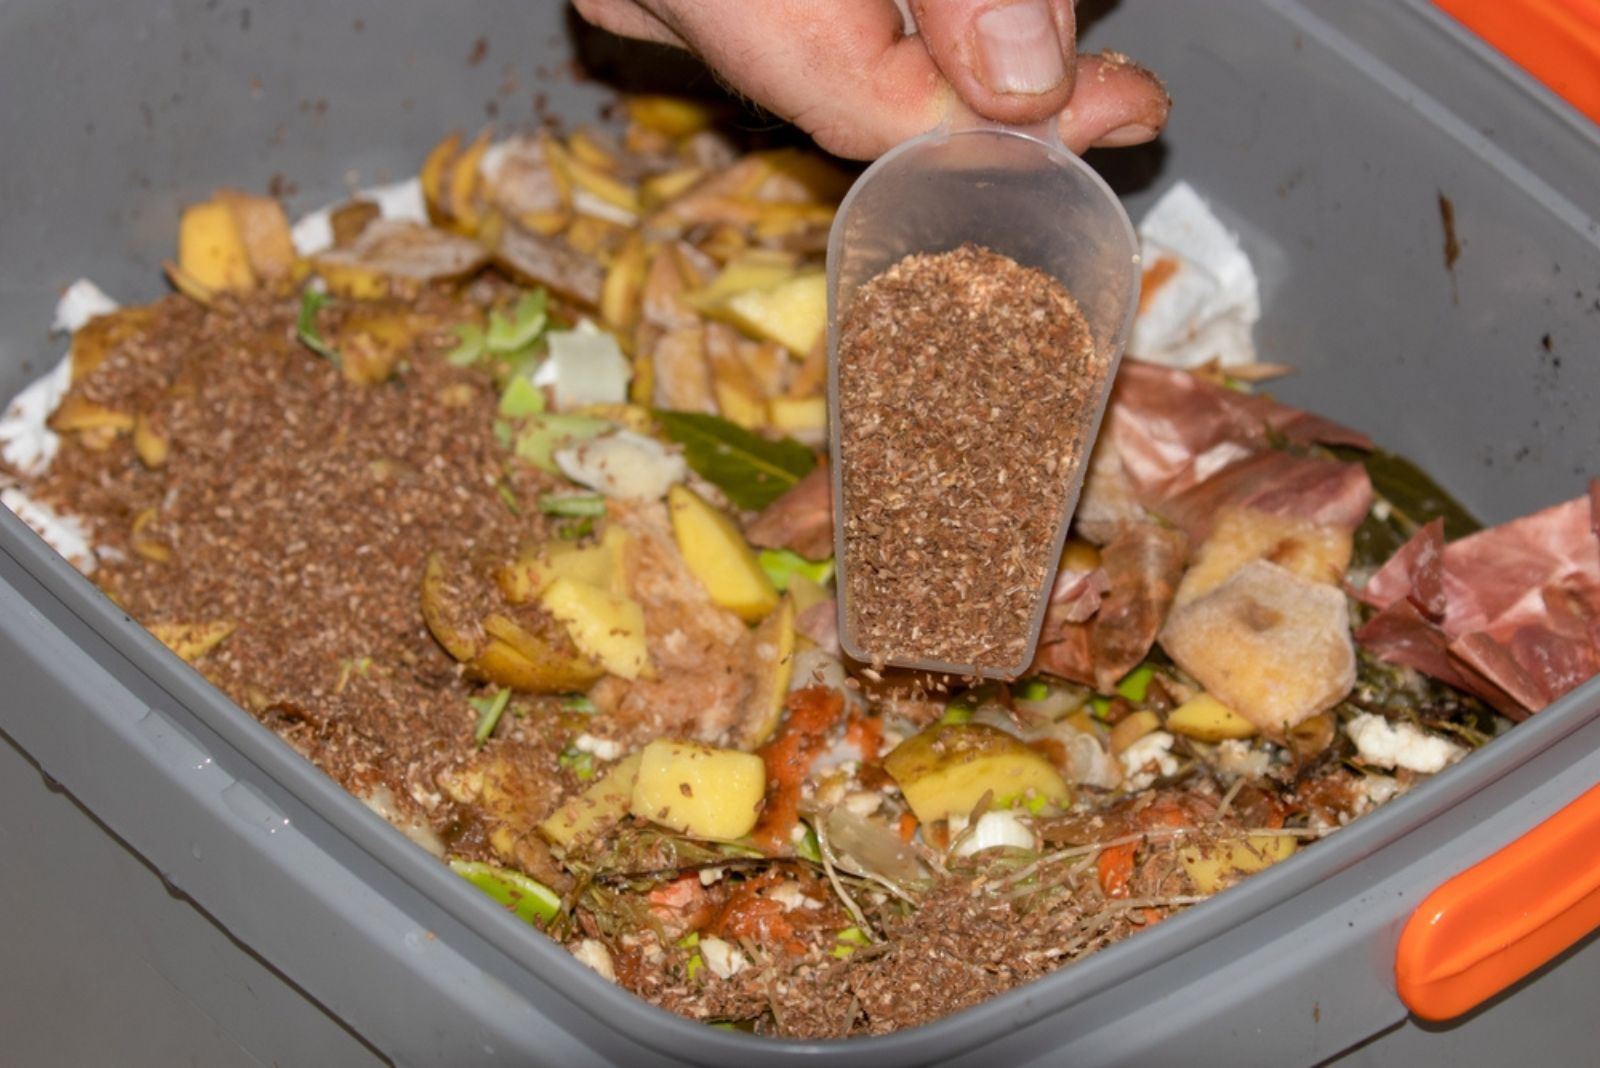 Composting Methods